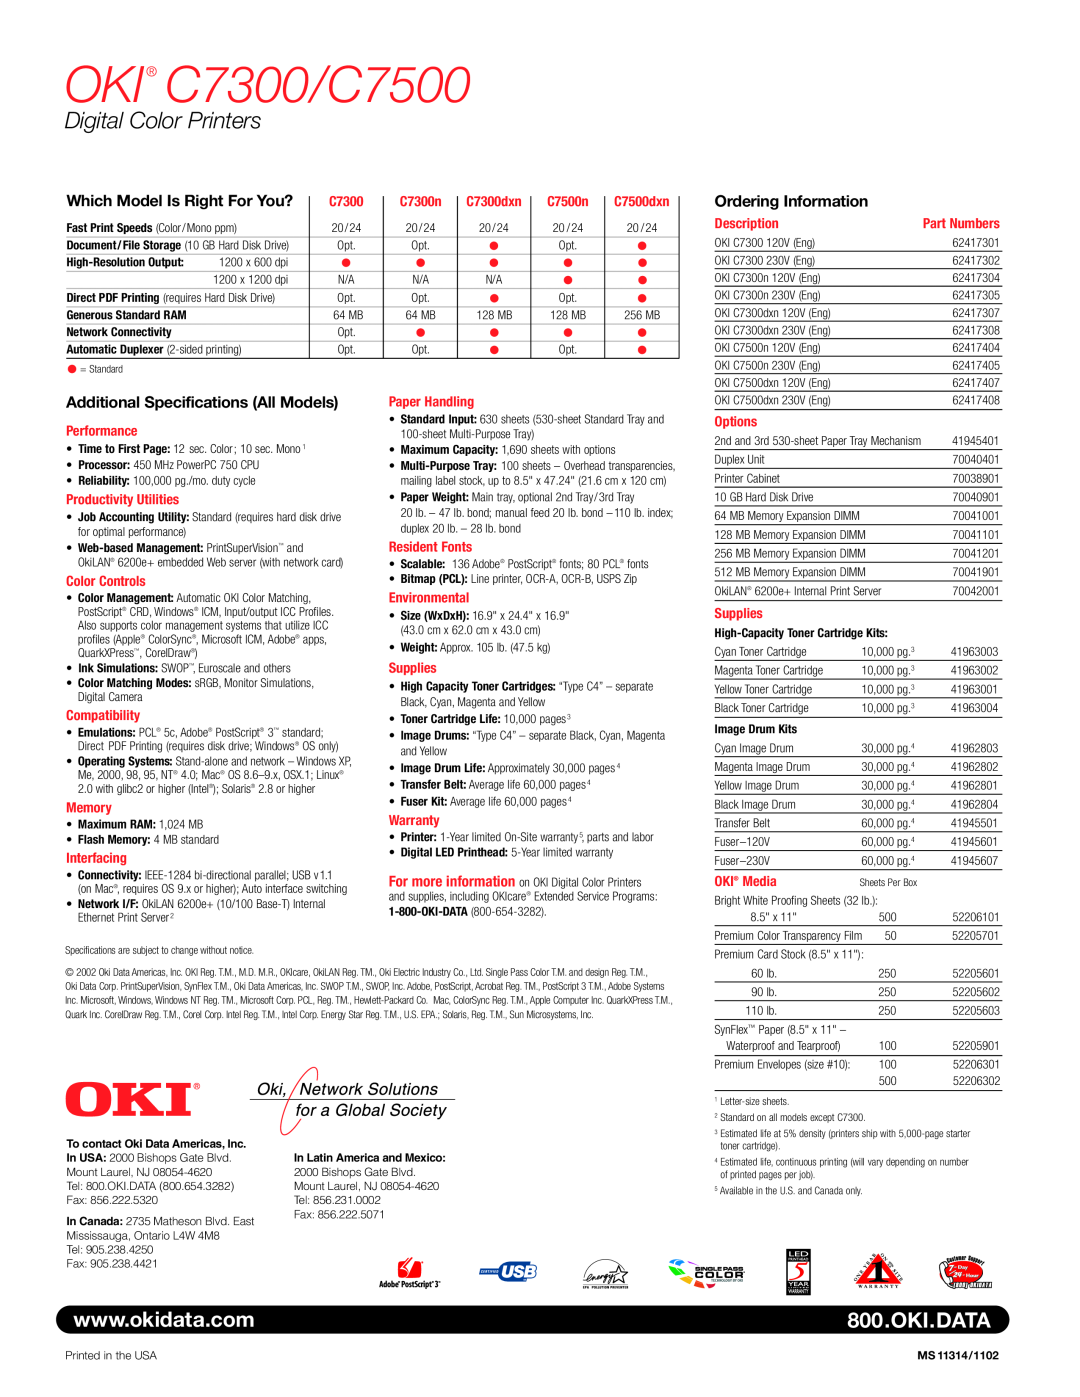 Oki warranty OKI C7300/C7500, Digital Color Printers, 800.OKI.DATA, Which Model Is Right For You?, Ordering Information 